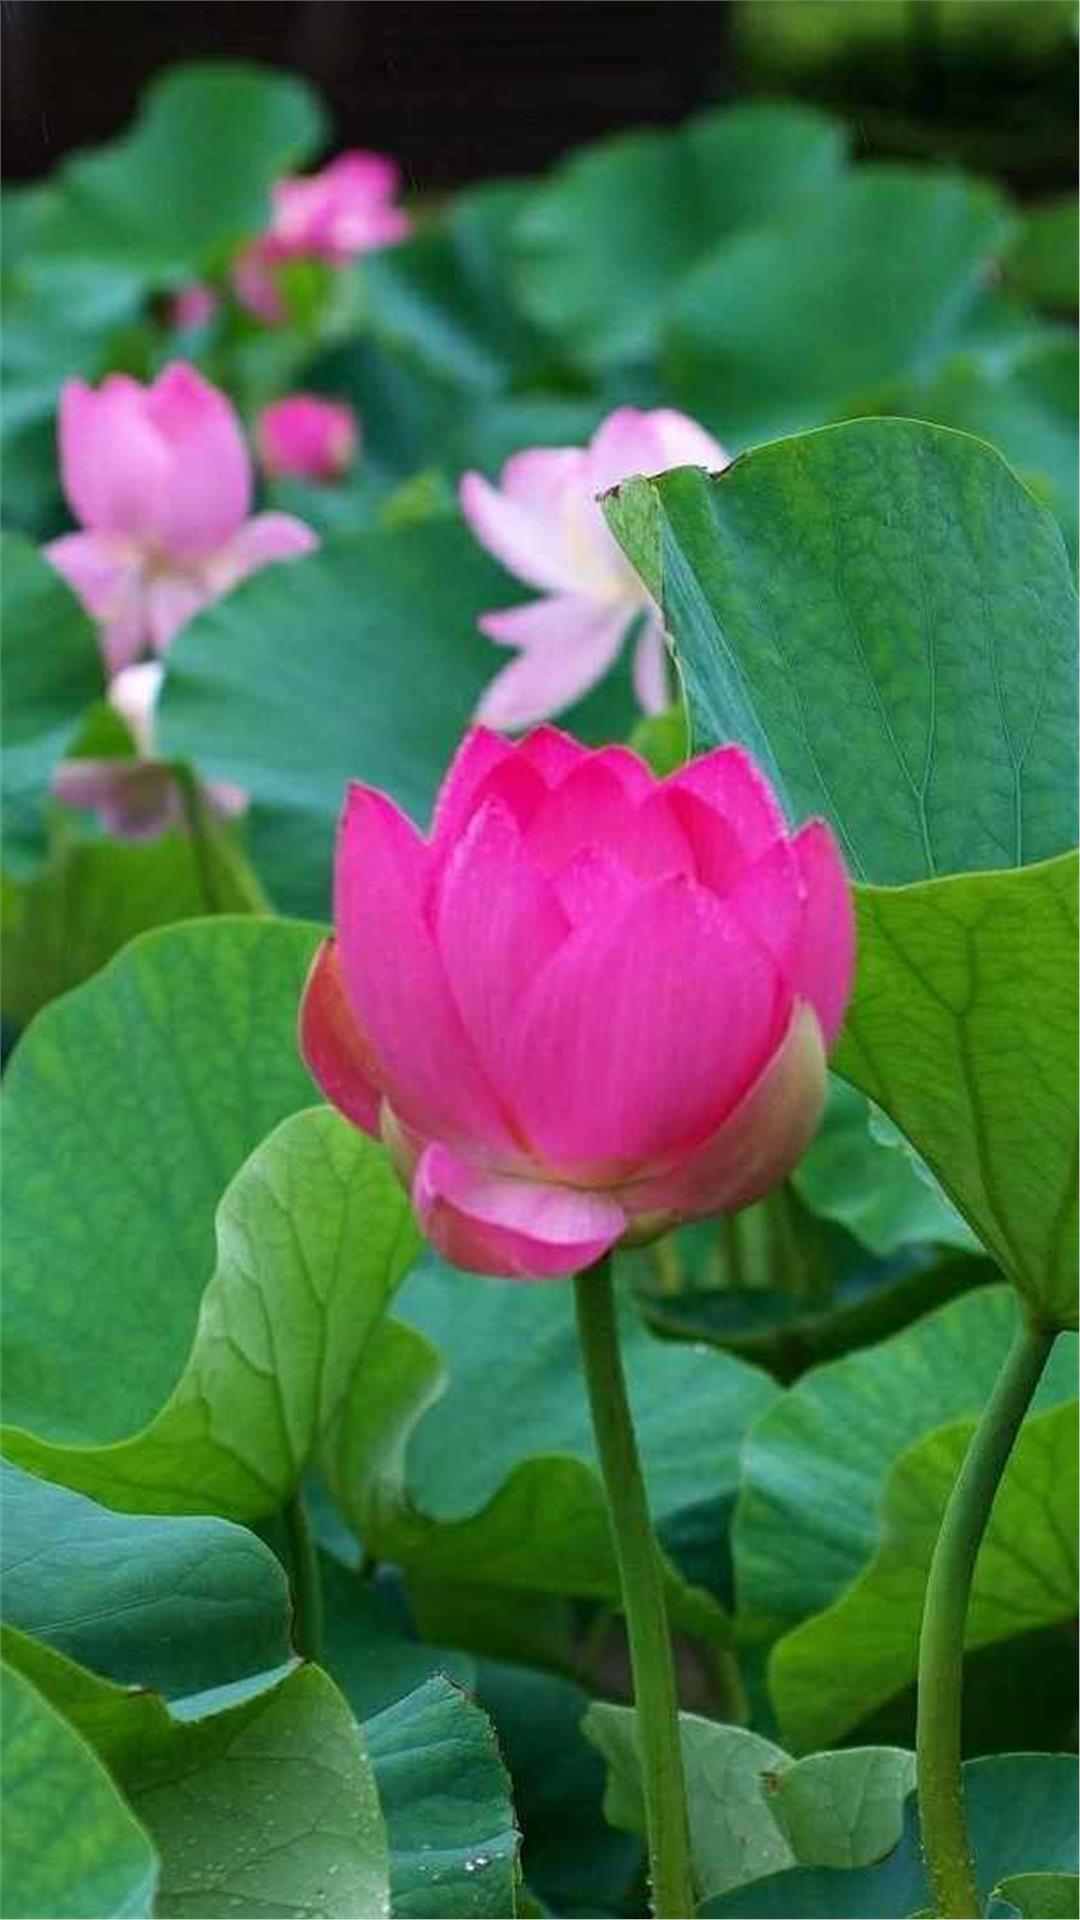 Lotus Flower iPhone Wallpaper